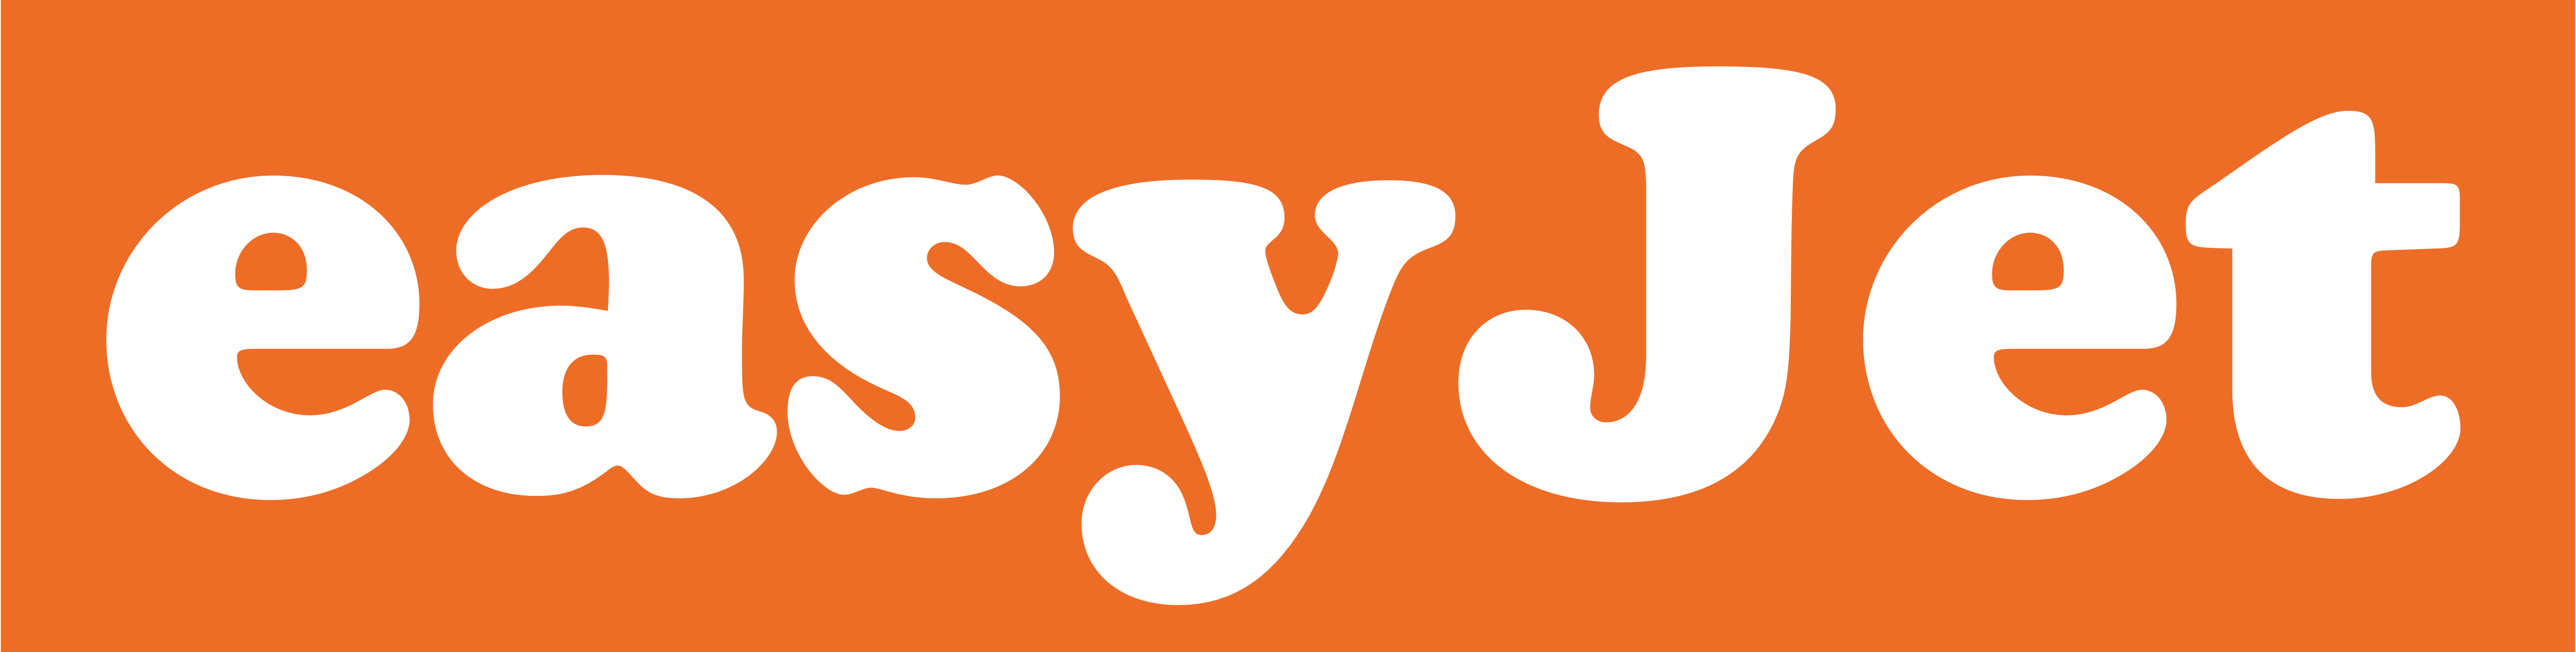 easyJet Logo - EasyJet